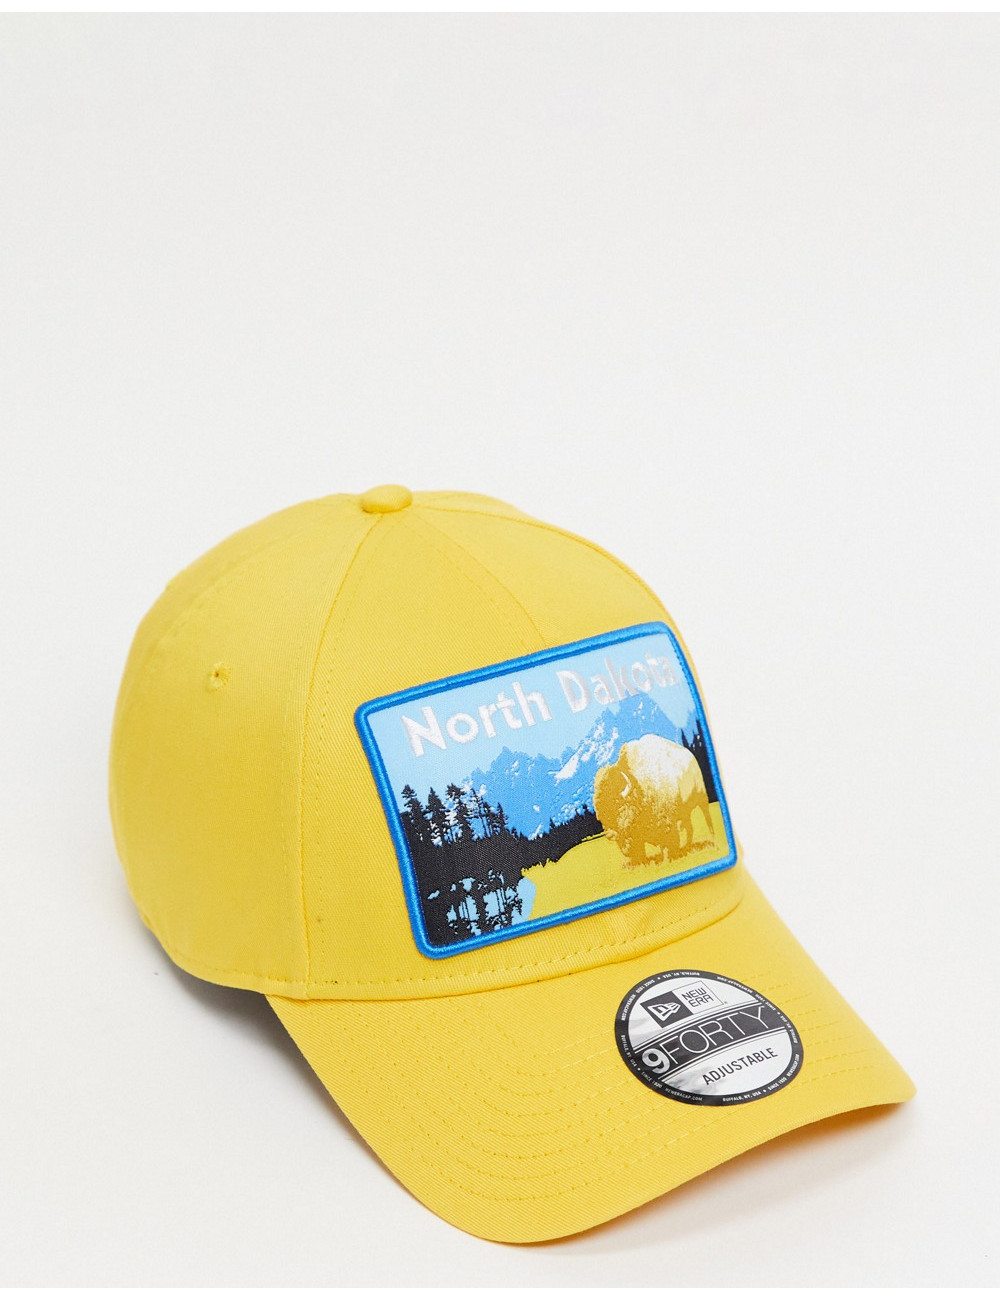 New Era 940 cap in yellow